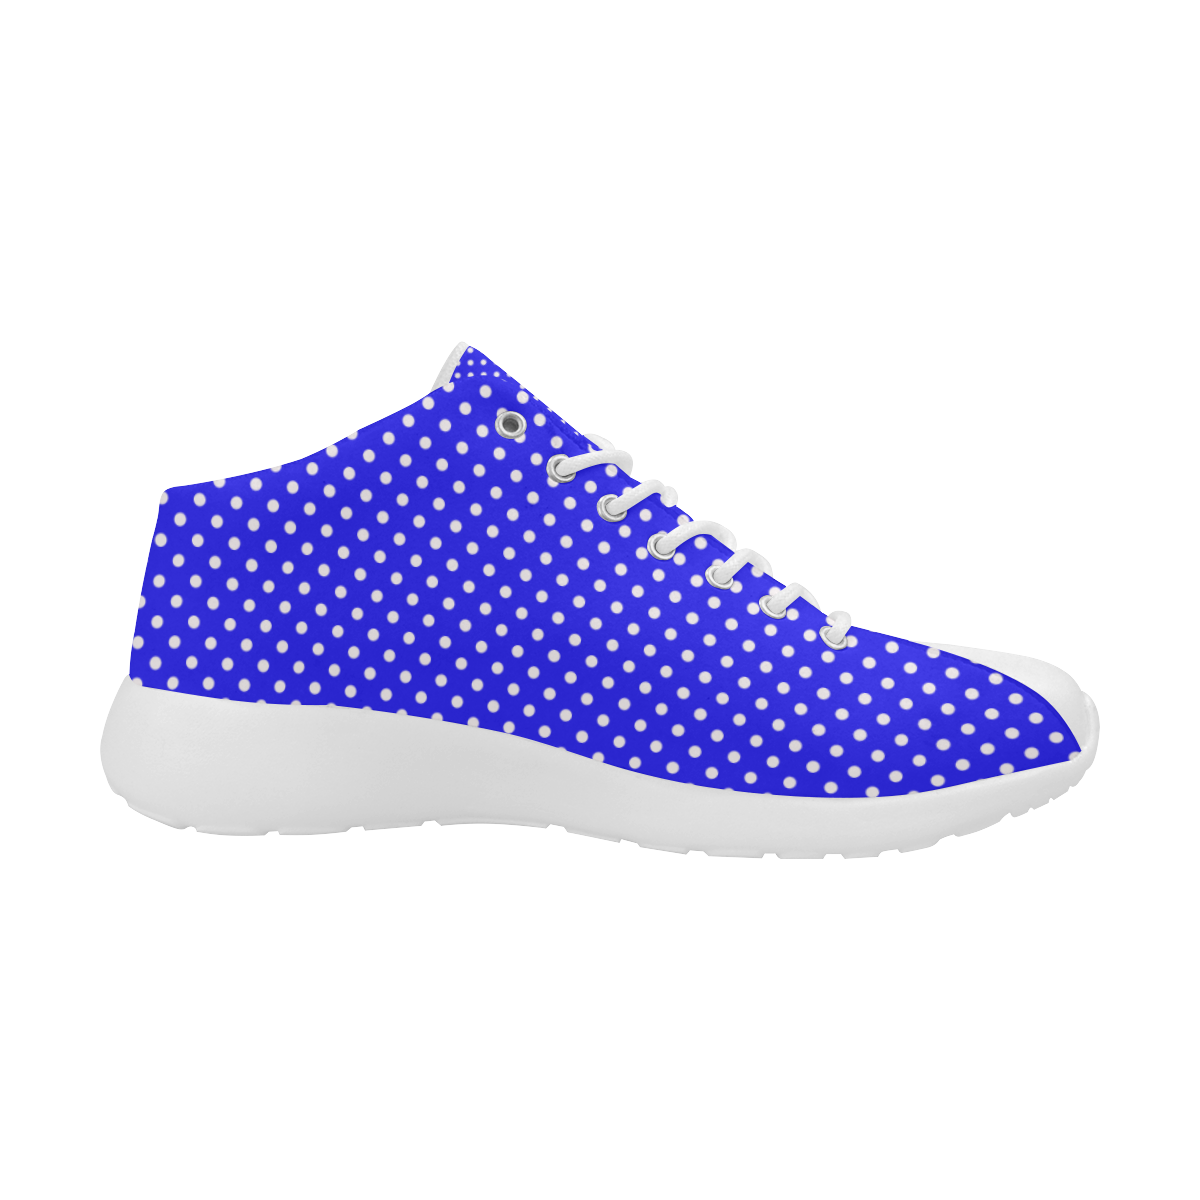 Blue polka dots Women's Basketball Training Shoes (Model 47502)